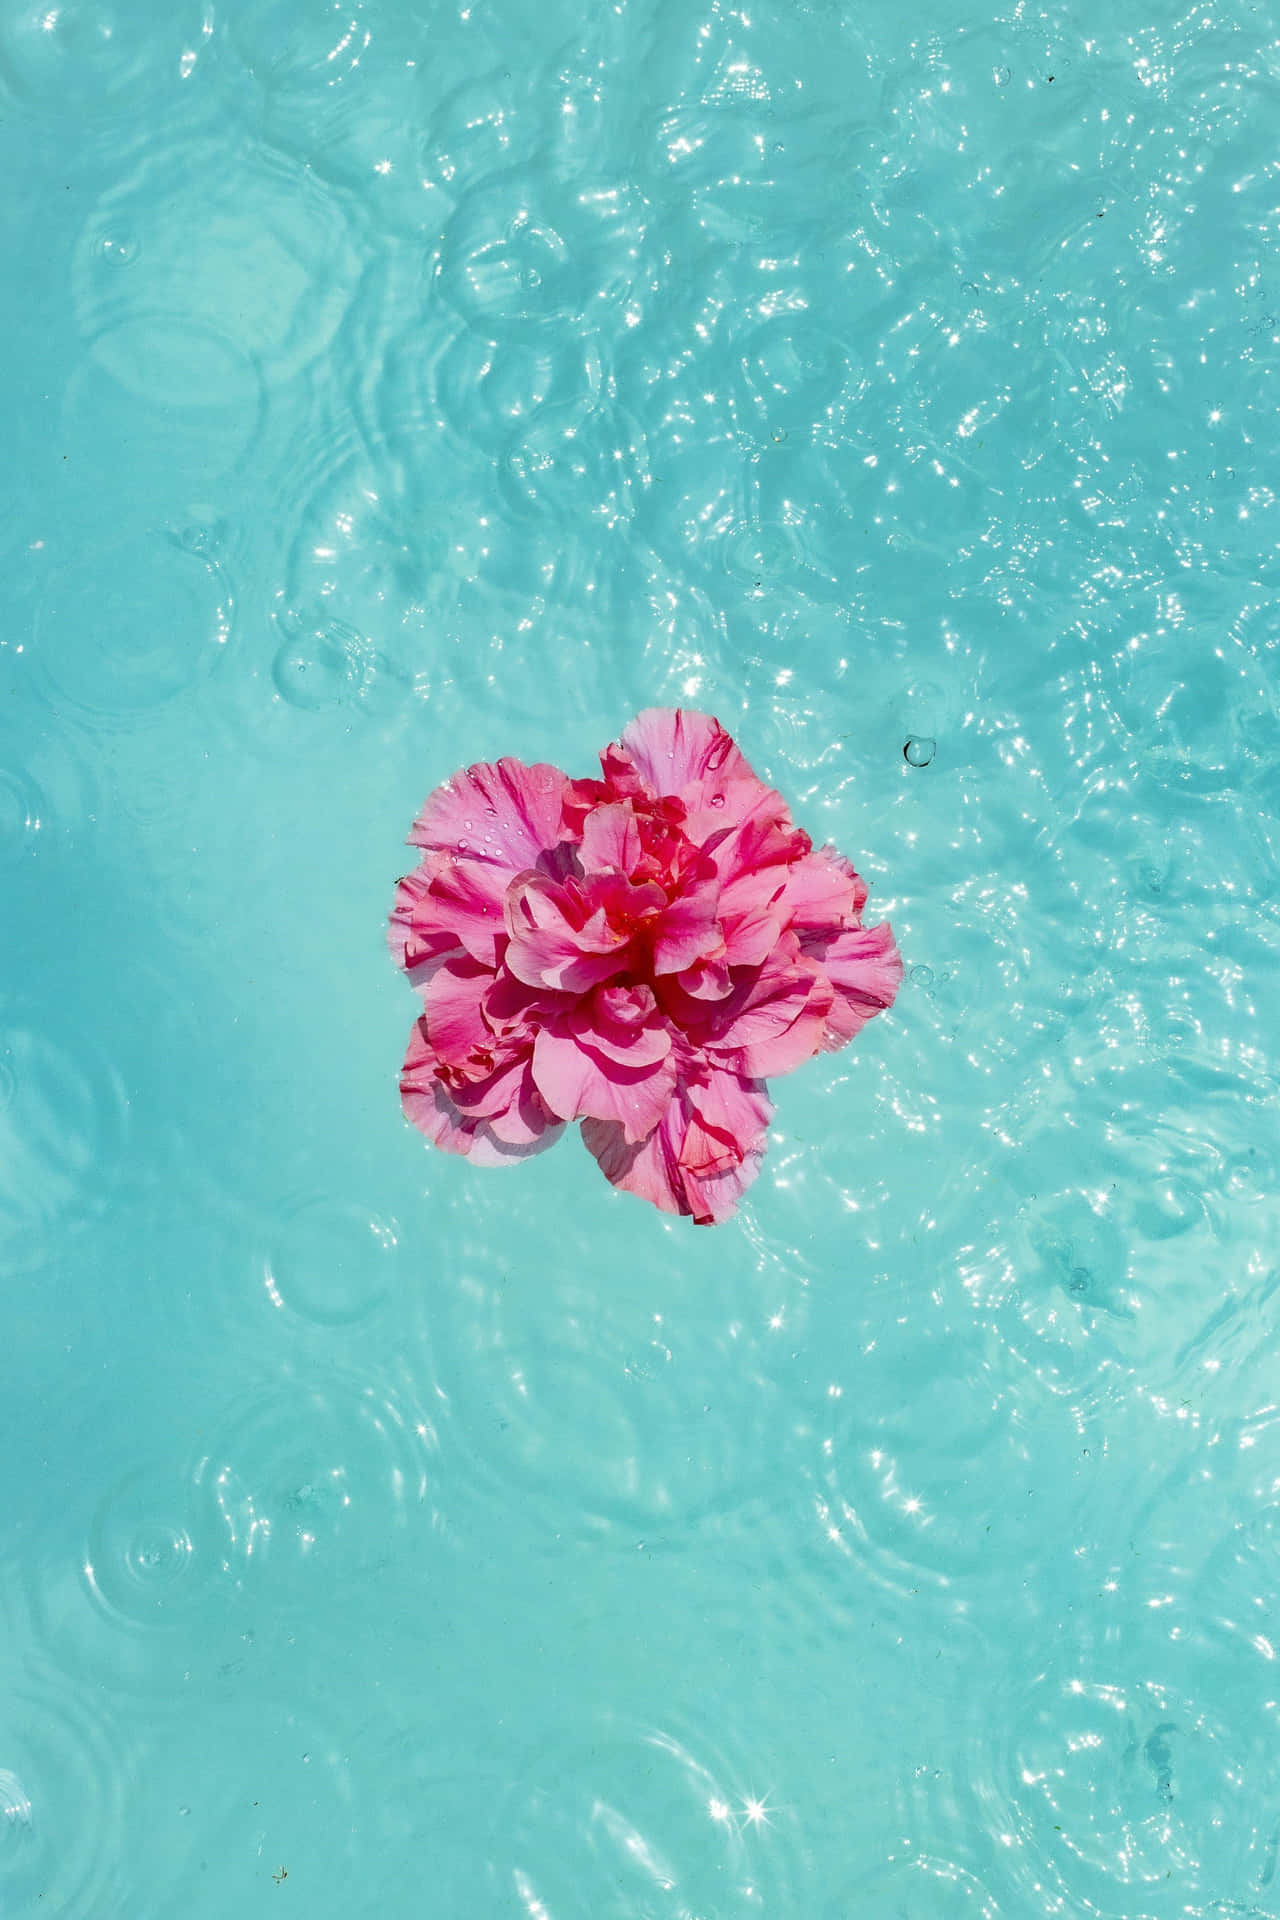 Floating Pink Hibiscuson Turquoise Water.jpg Wallpaper